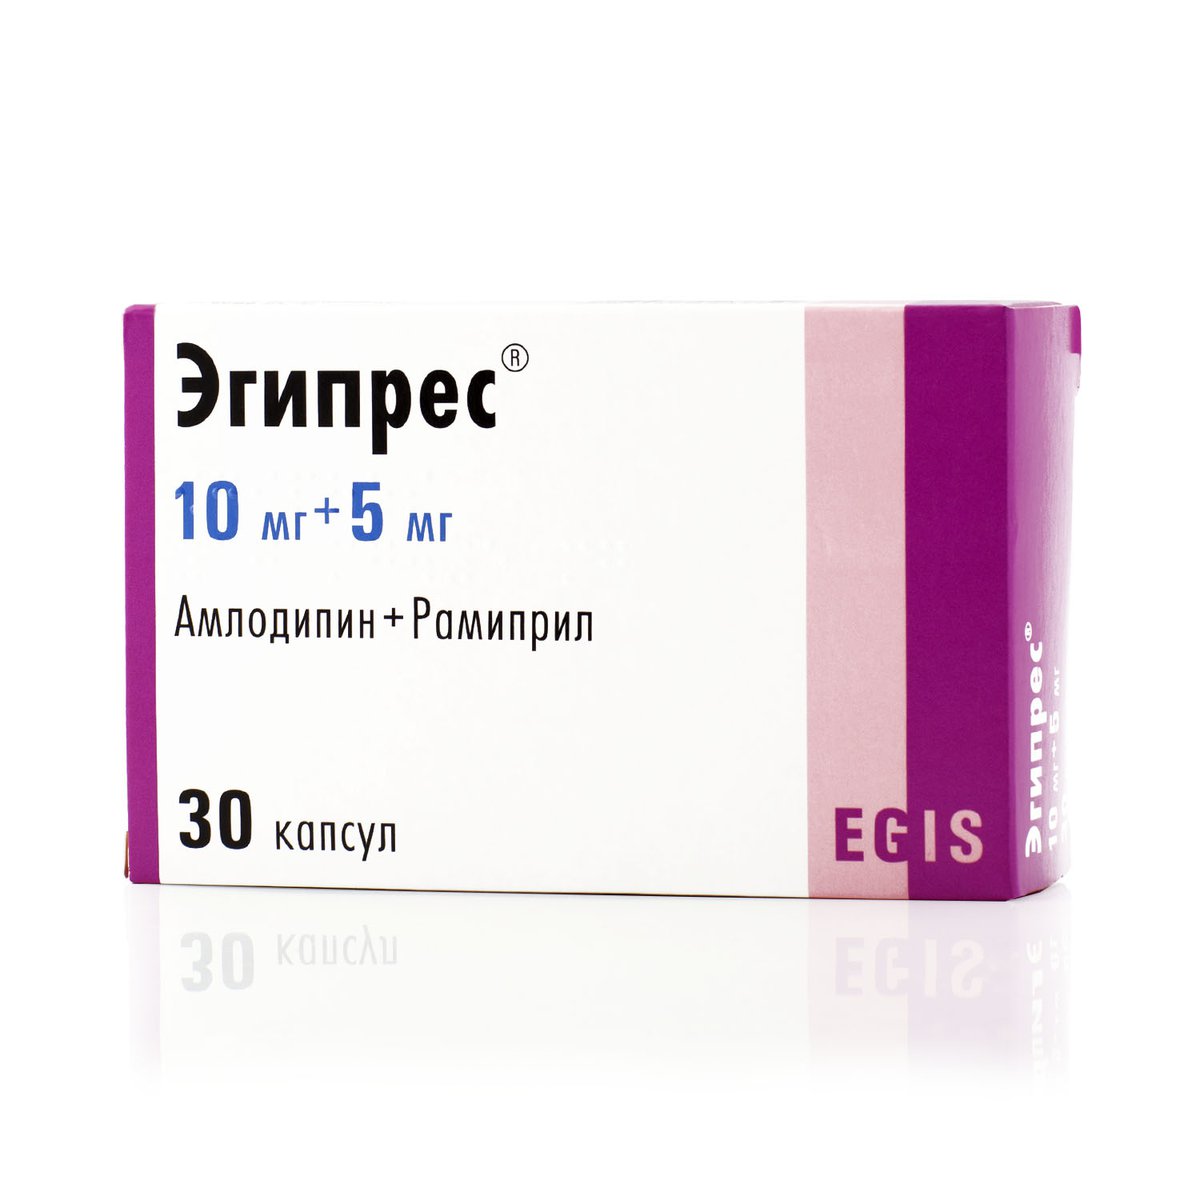 Эгипрес (капсулы, 30 шт, 10 + 5 мг) - цена,  онлайн  .